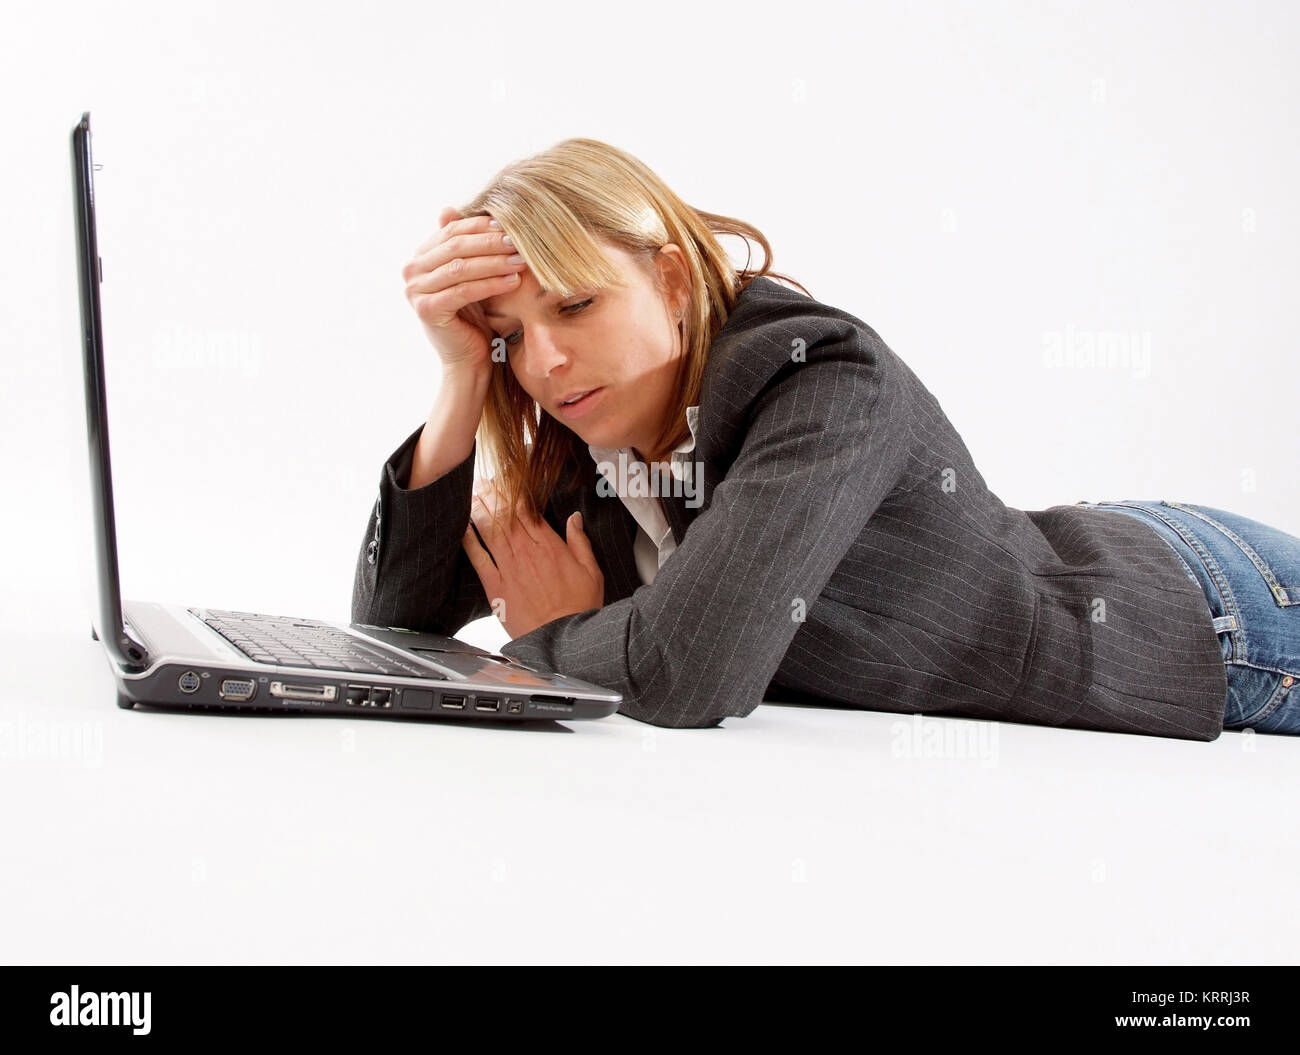 Erschoepfte Geschaeftsfrau mit Laptop - business woman with laptop Stock Photo